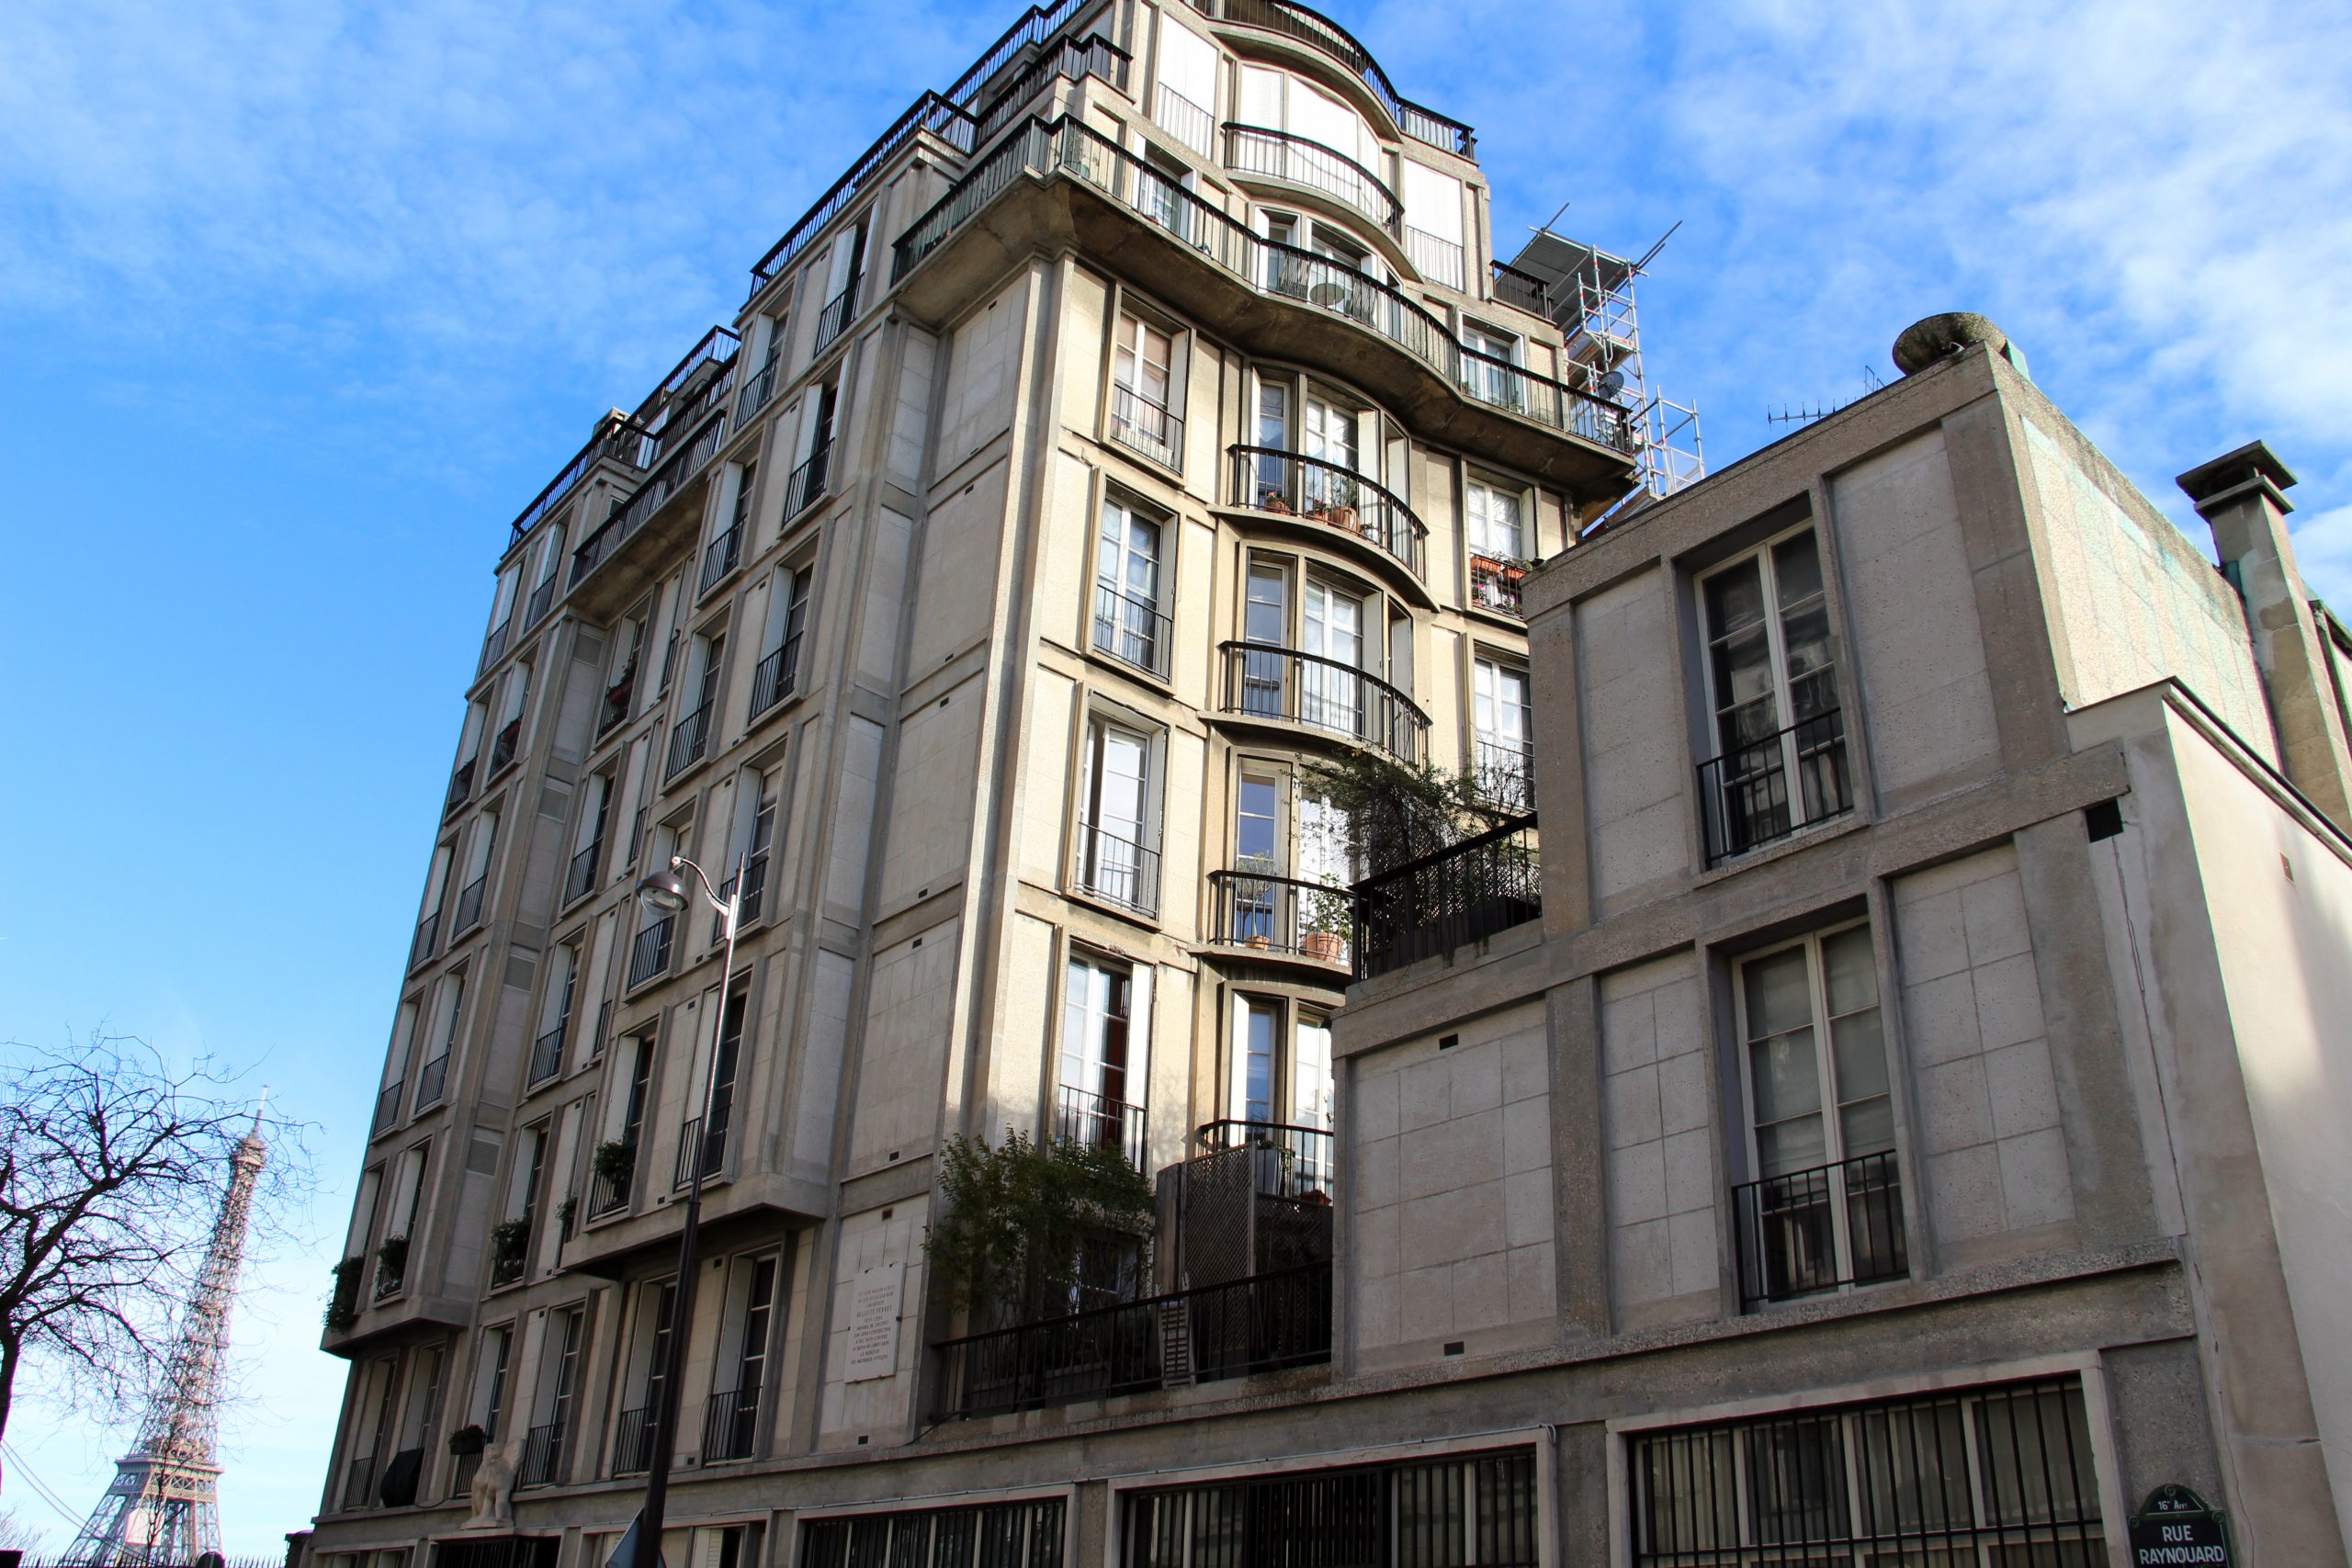 55 rue Raynouard building façade